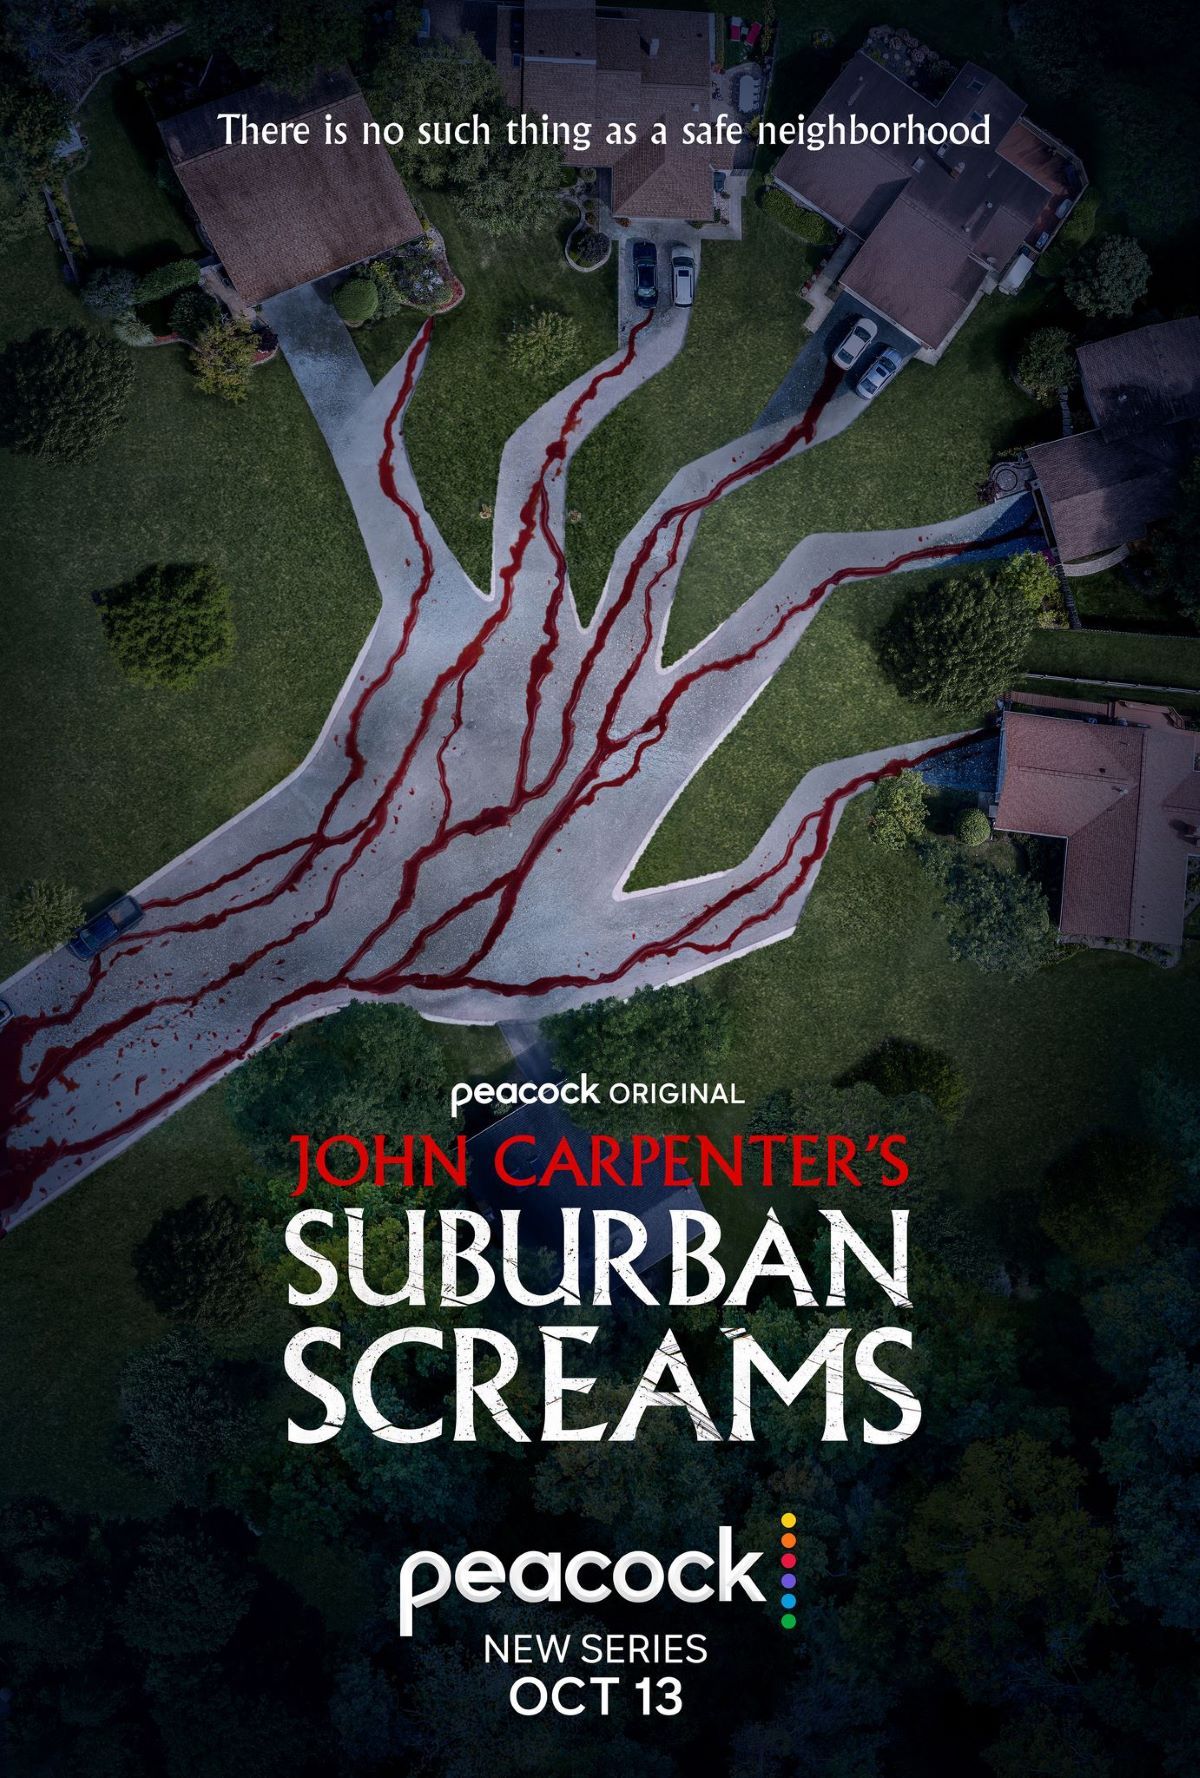 John Carpenter's Suburban Screams Trailer The Master of Horror